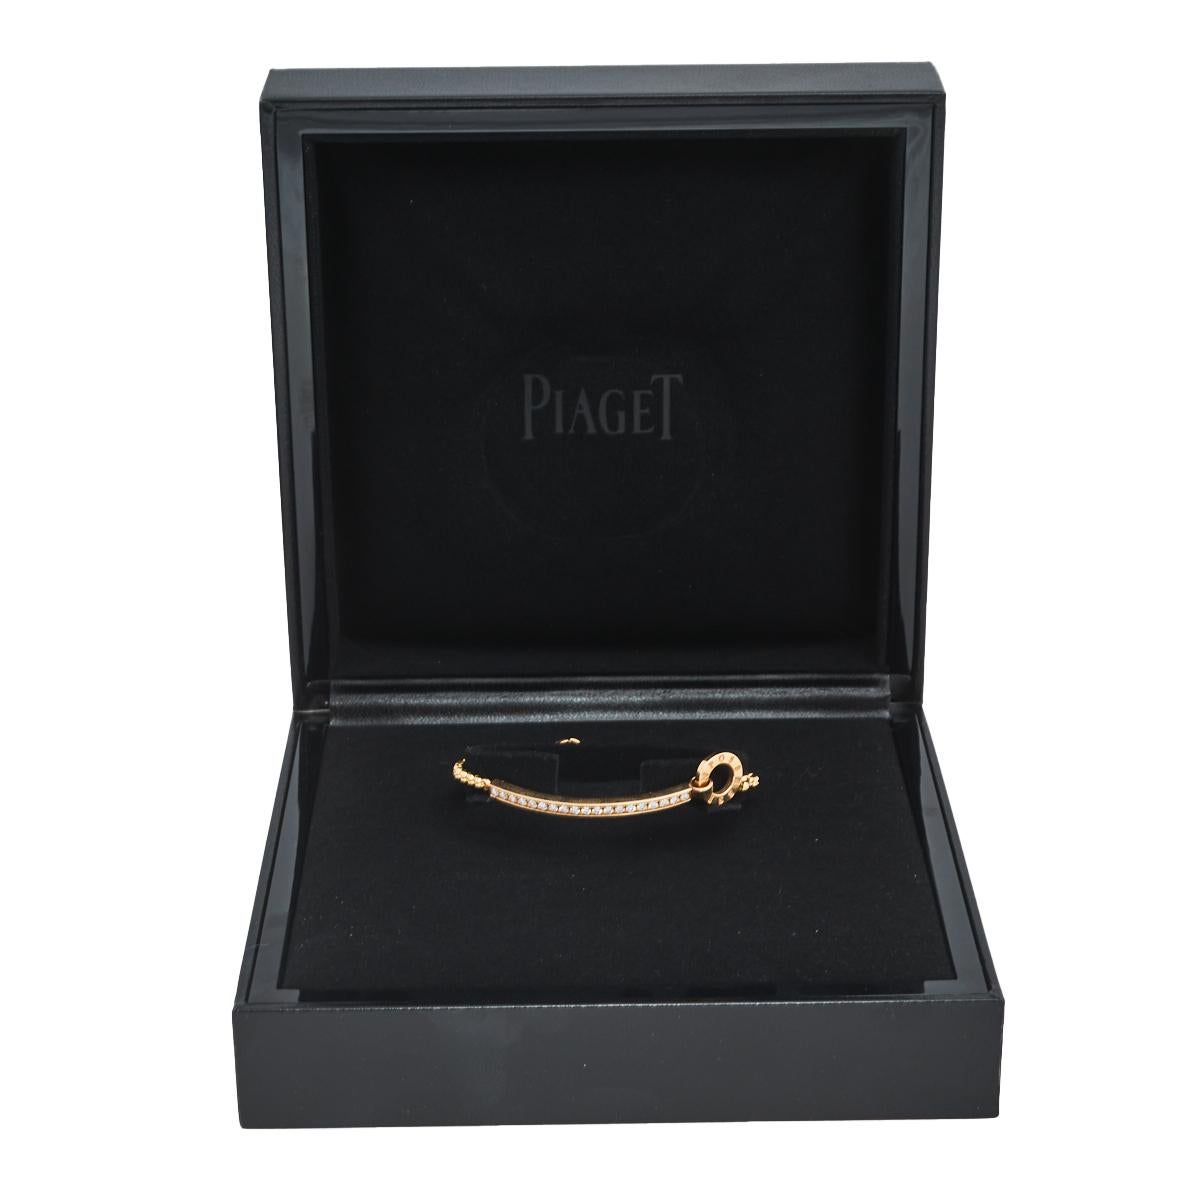 Contemporary Piaget Possession Diamond 18K Rose Gold Bracelet